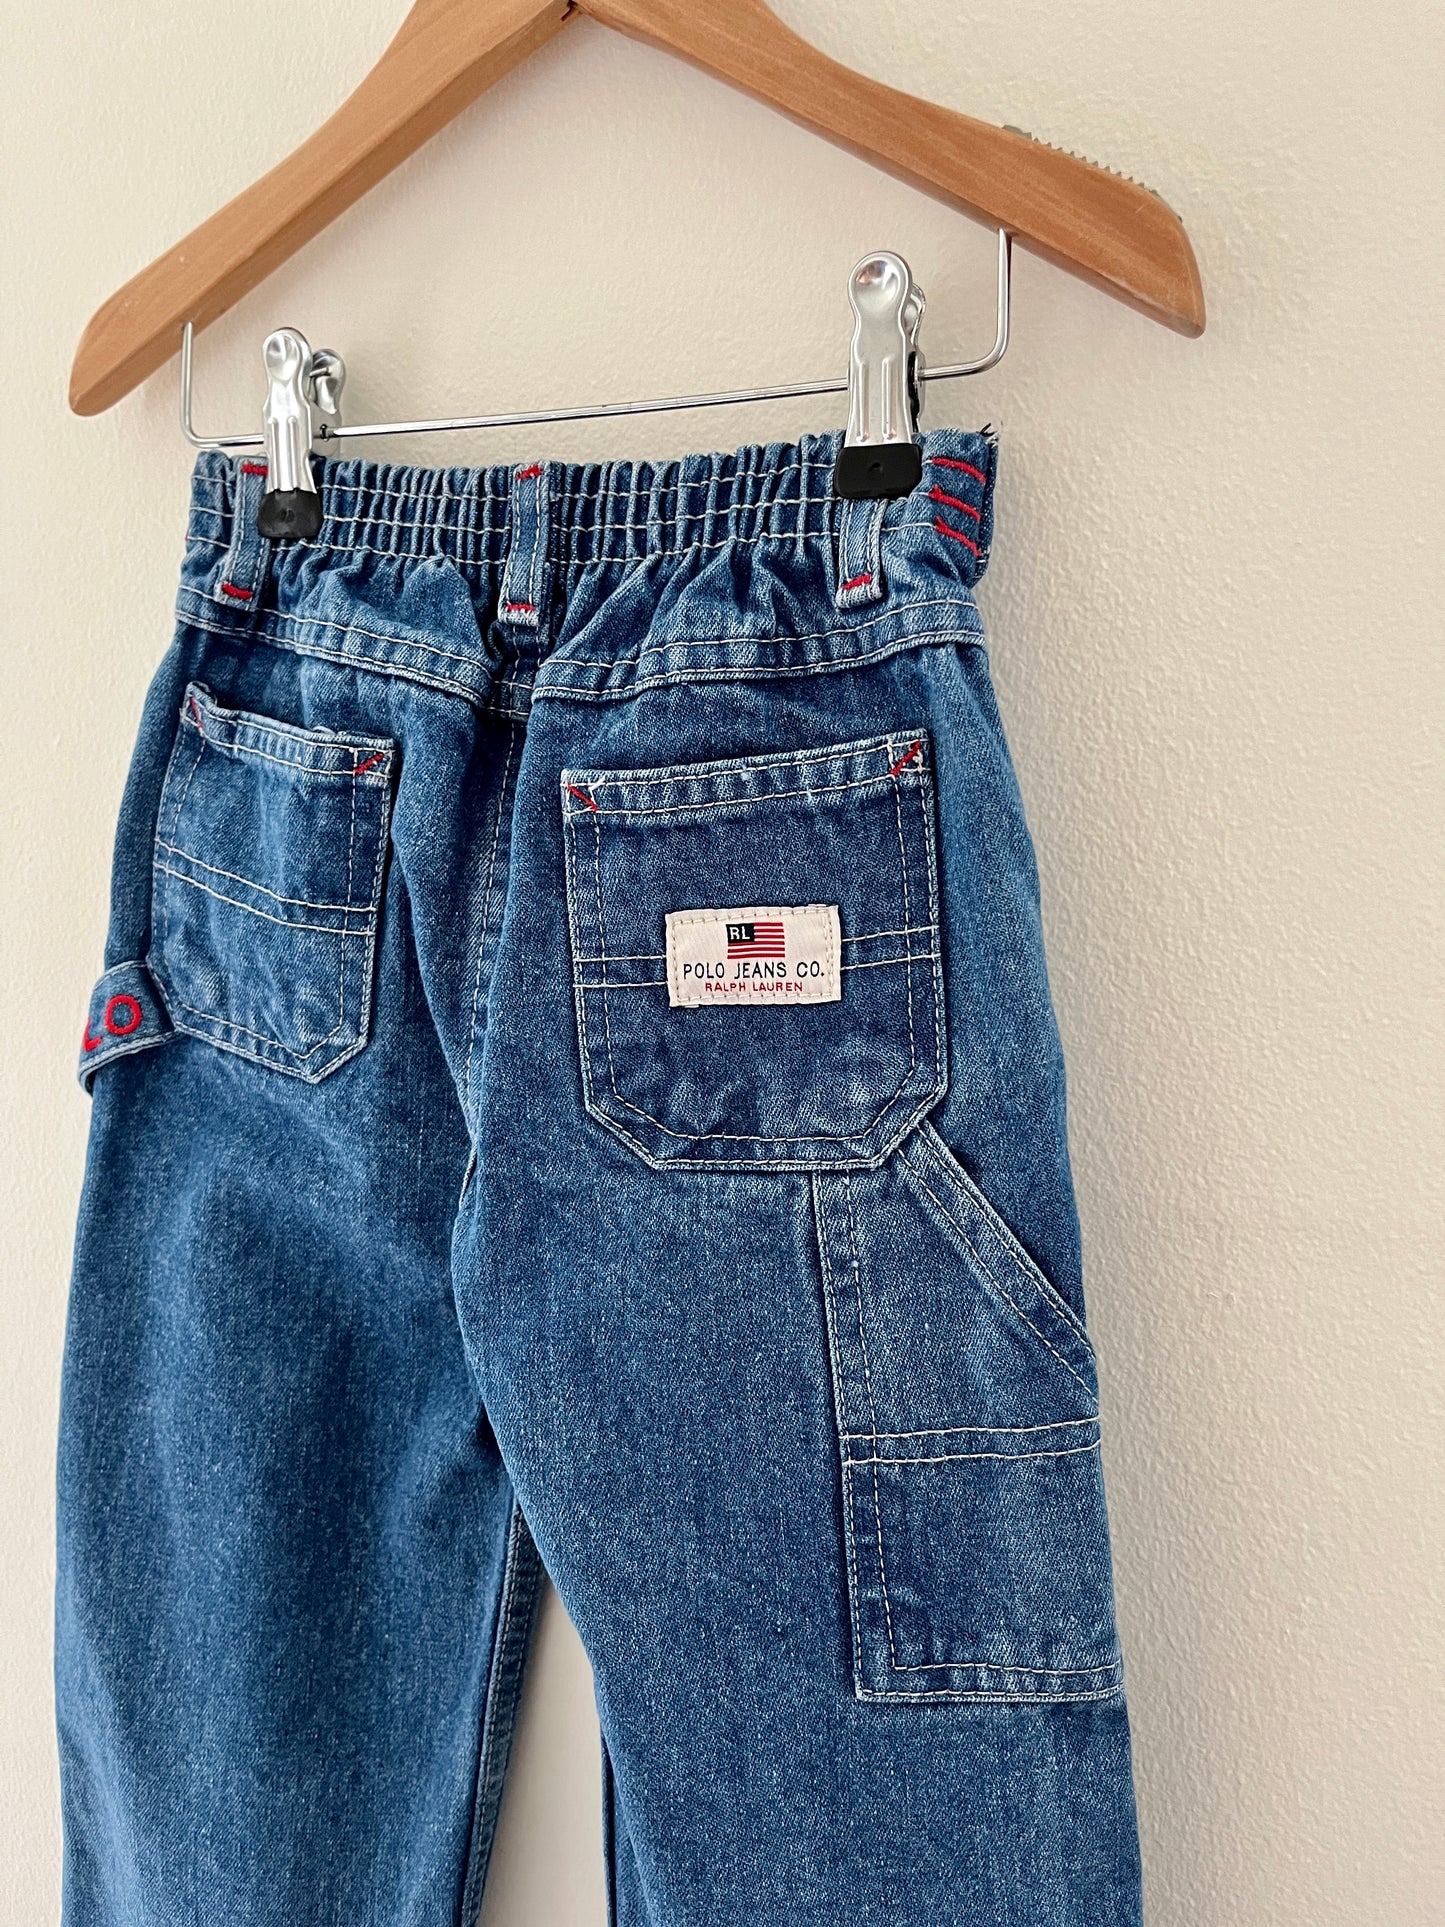 Carpenter jeans, 92/98